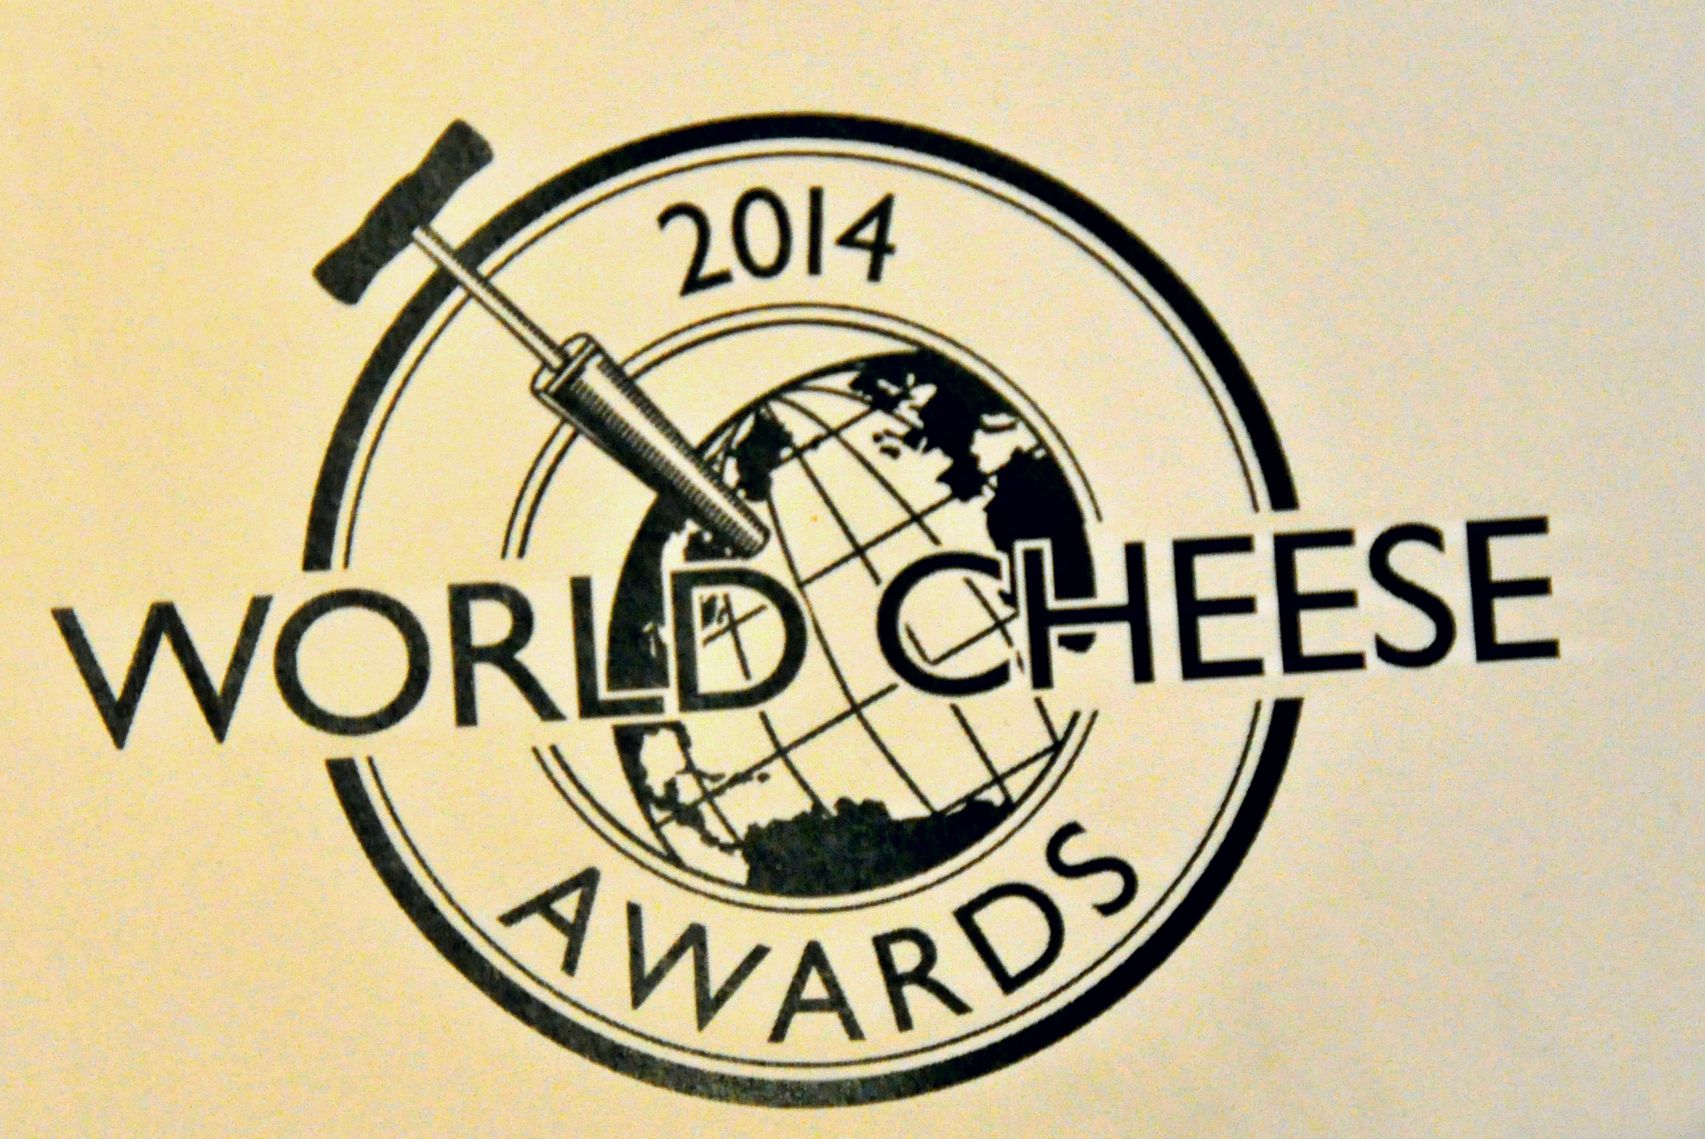 WORLD CHEESE AWARDS 2014